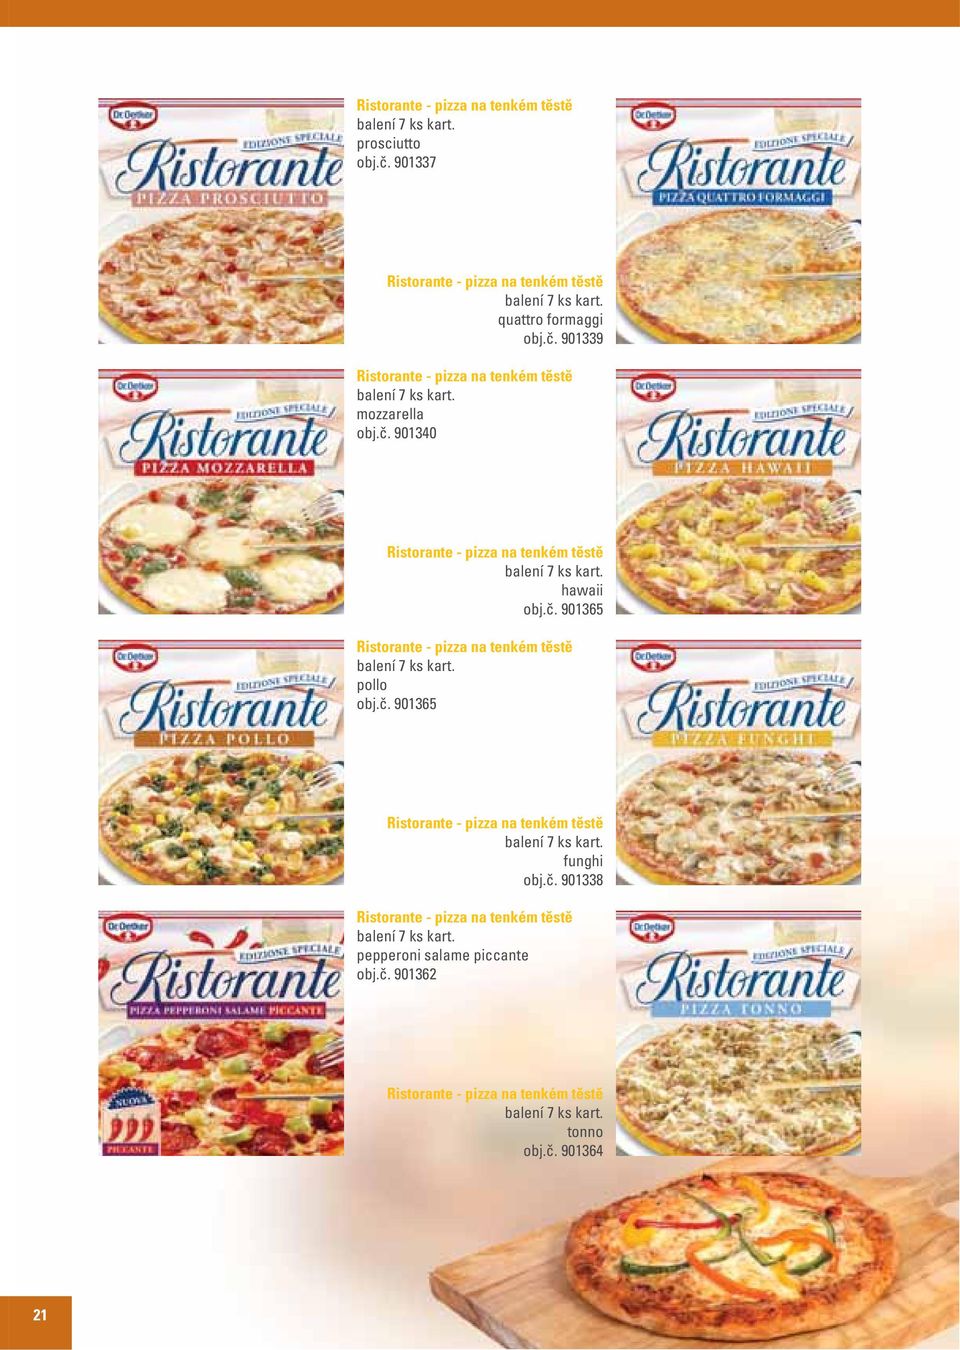 pollo obj.č. 901365 Ristorante - pizza na tenkém těstě balení 7 ks kart. funghi obj.č. 901338 Ristorante - pizza na tenkém těstě balení 7 ks kart.